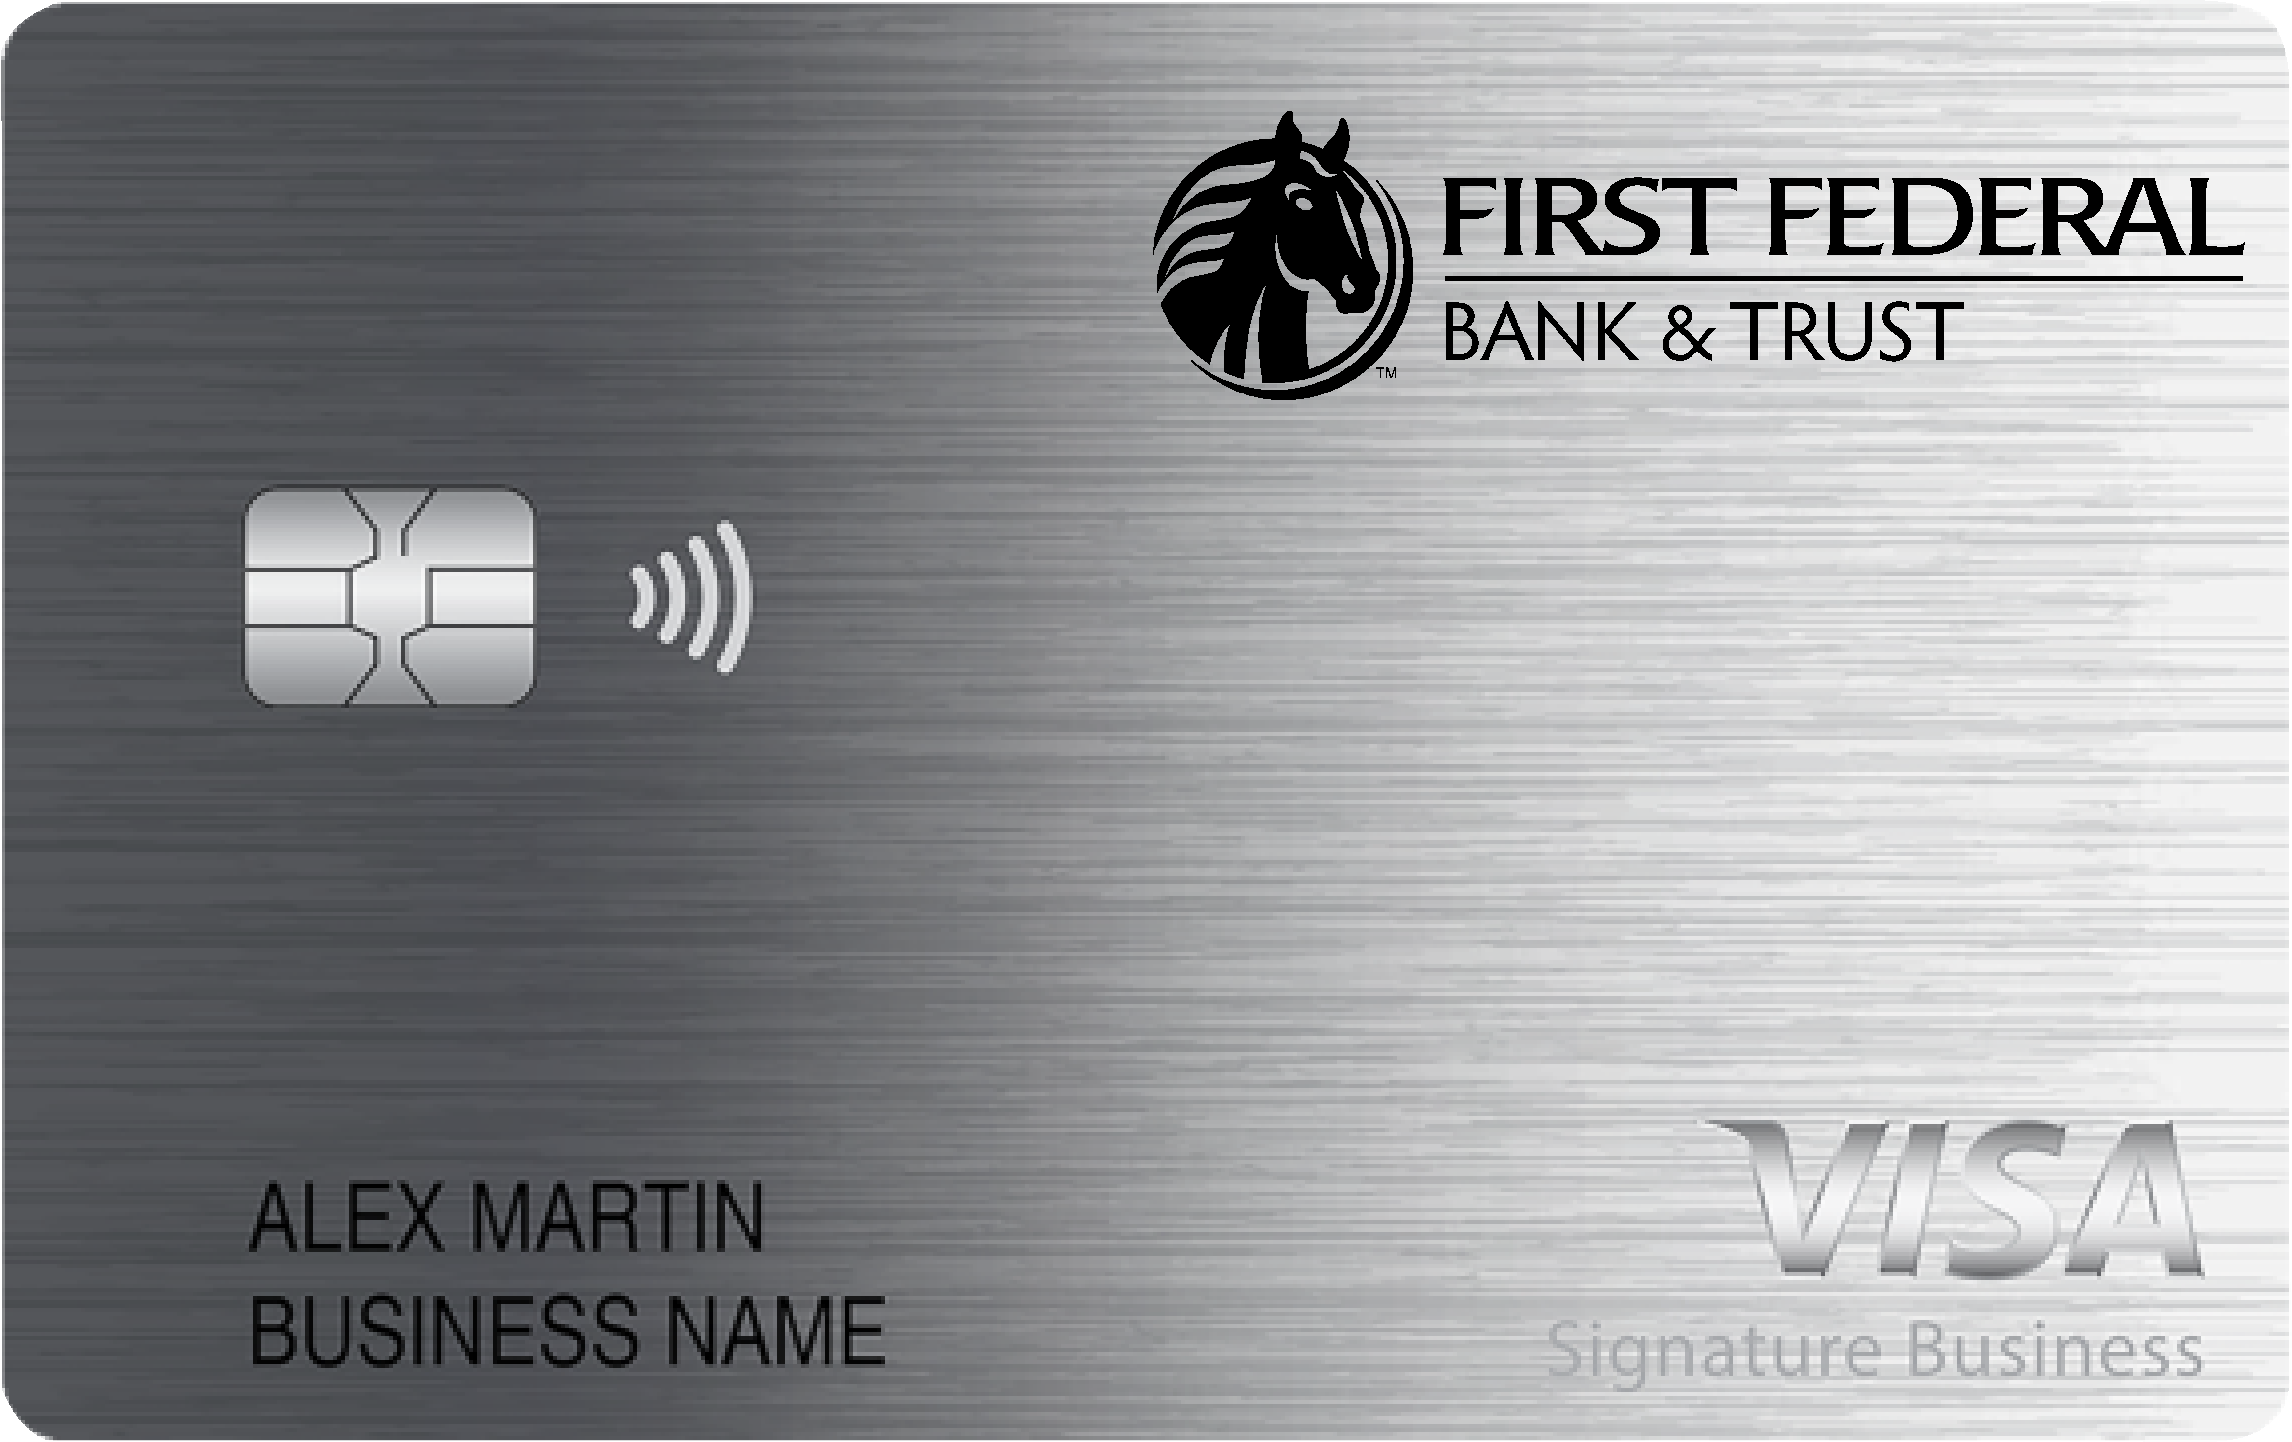 First Federal Bank & Trust Smart Business Rewards Card